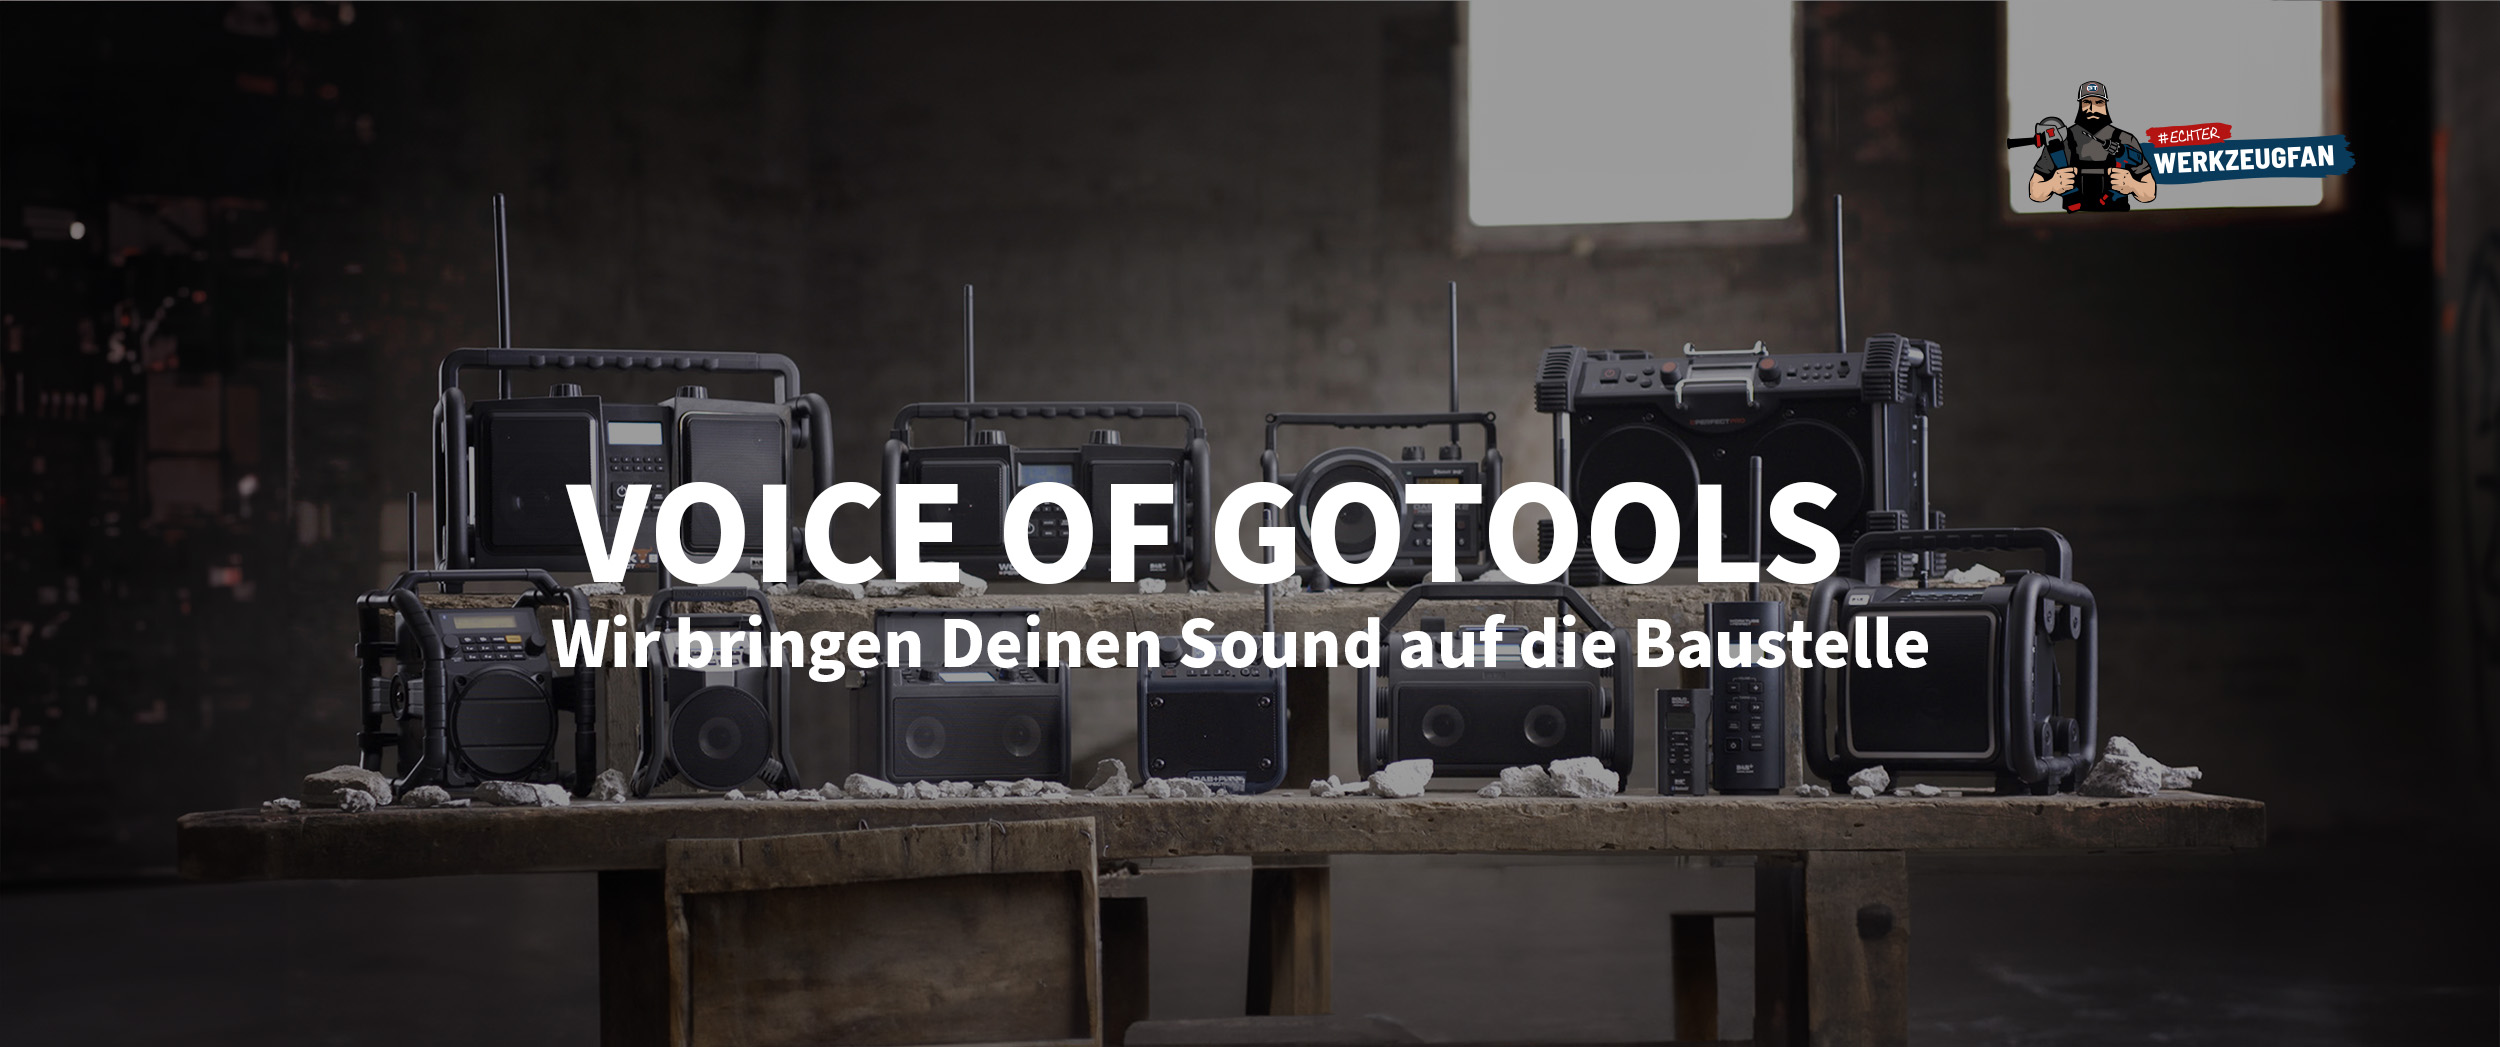 baustellenradios-speaker-bei-gotools